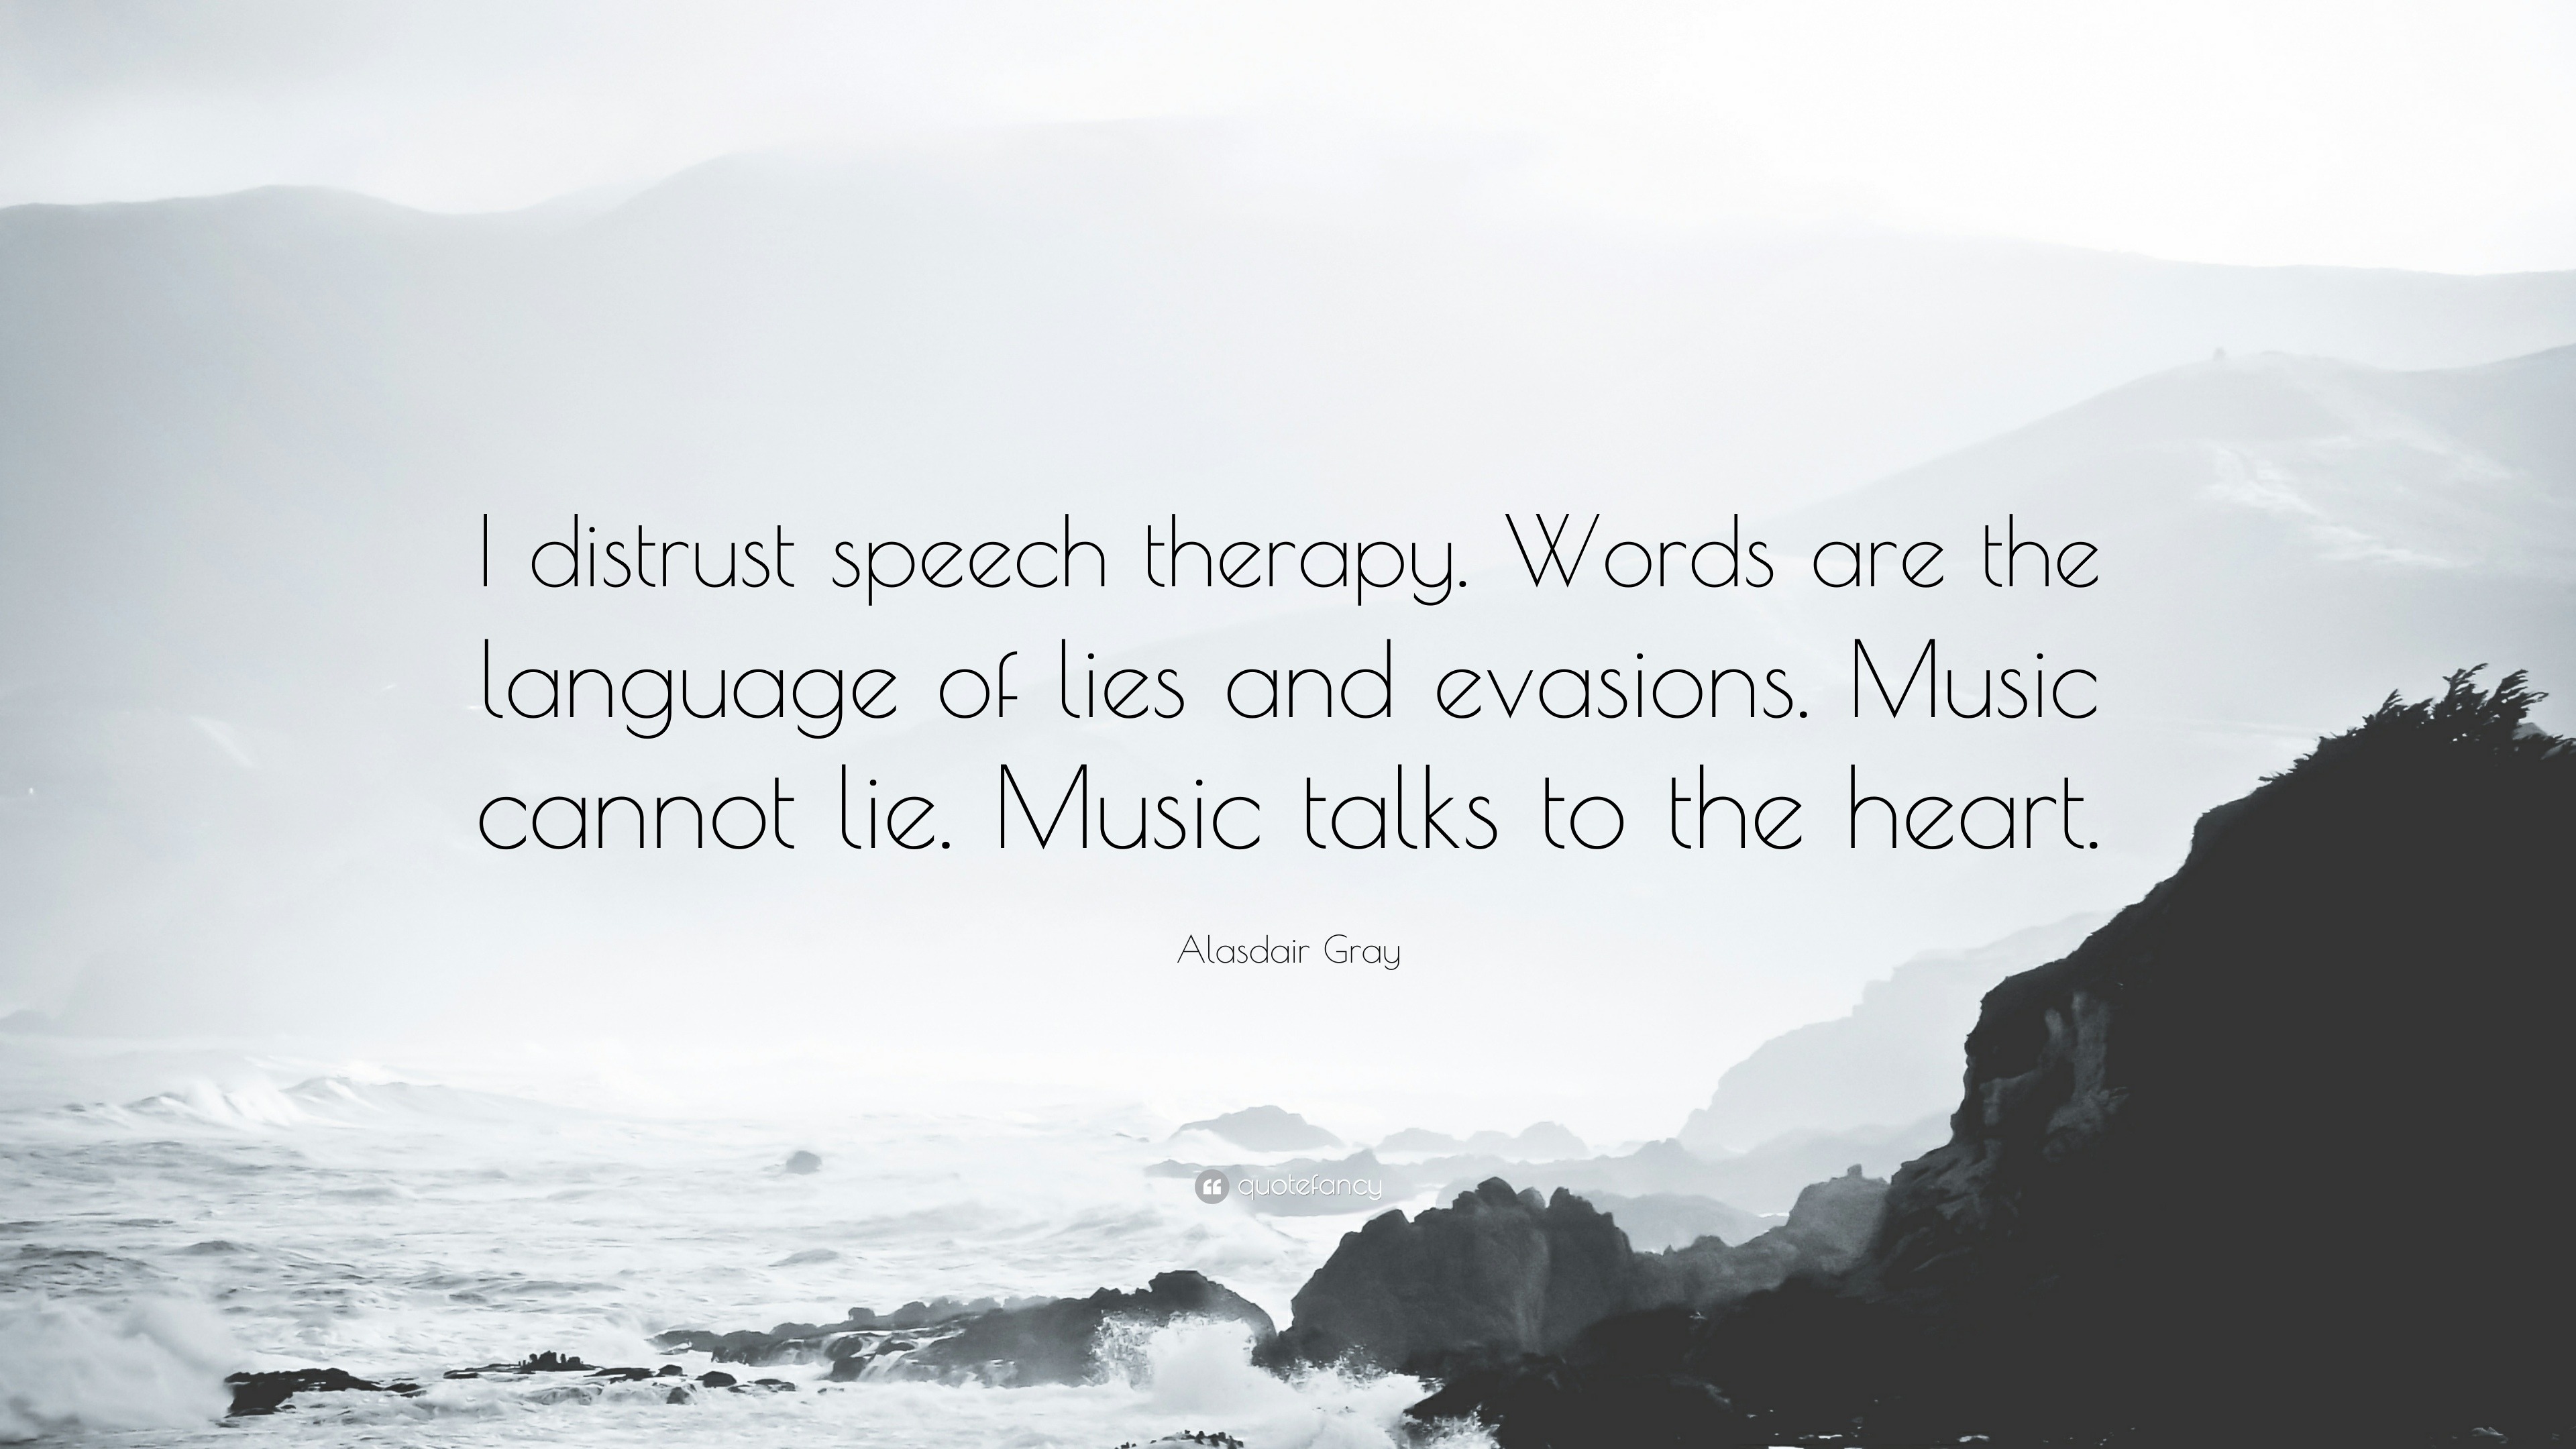 speech language pathology quotes